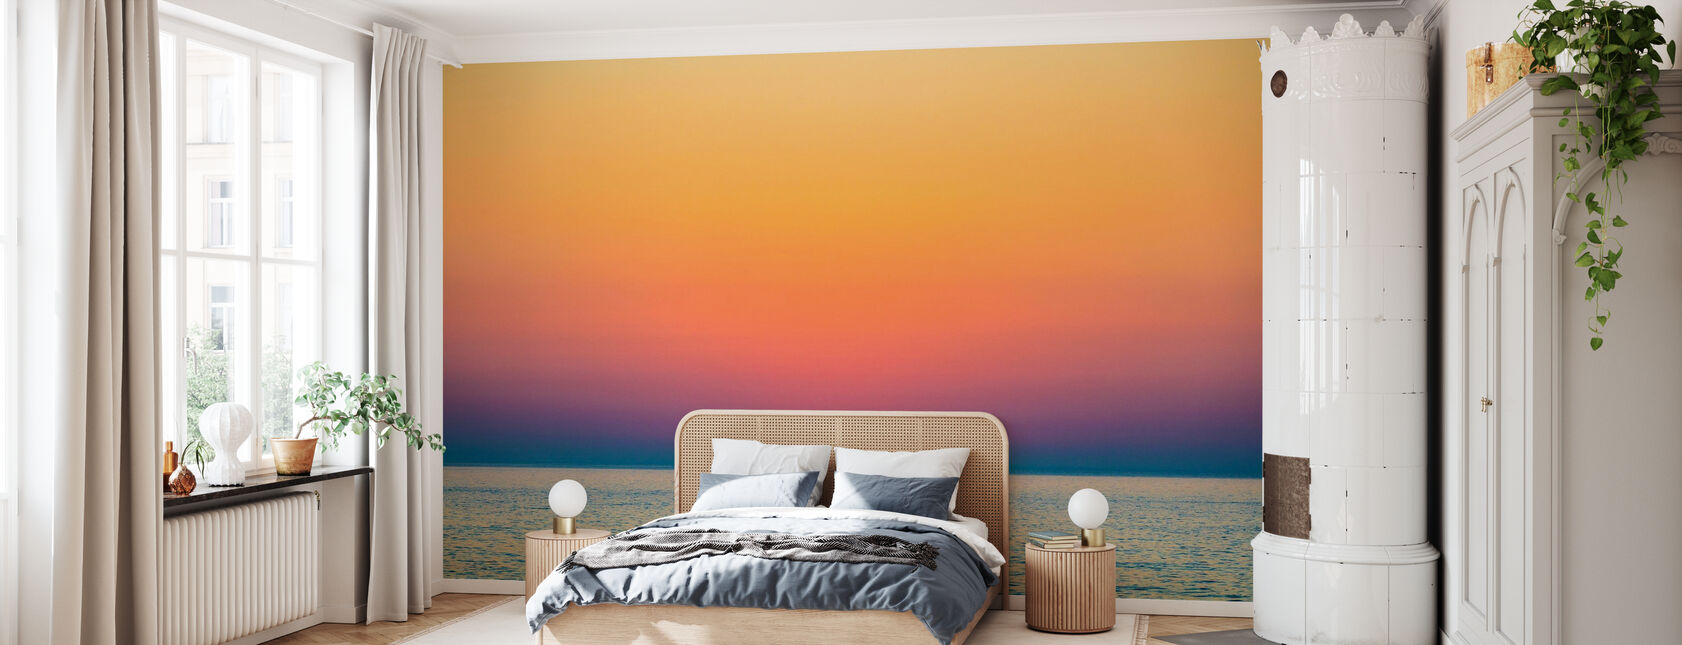 Sunset 2 - Wallpaper - Bedroom